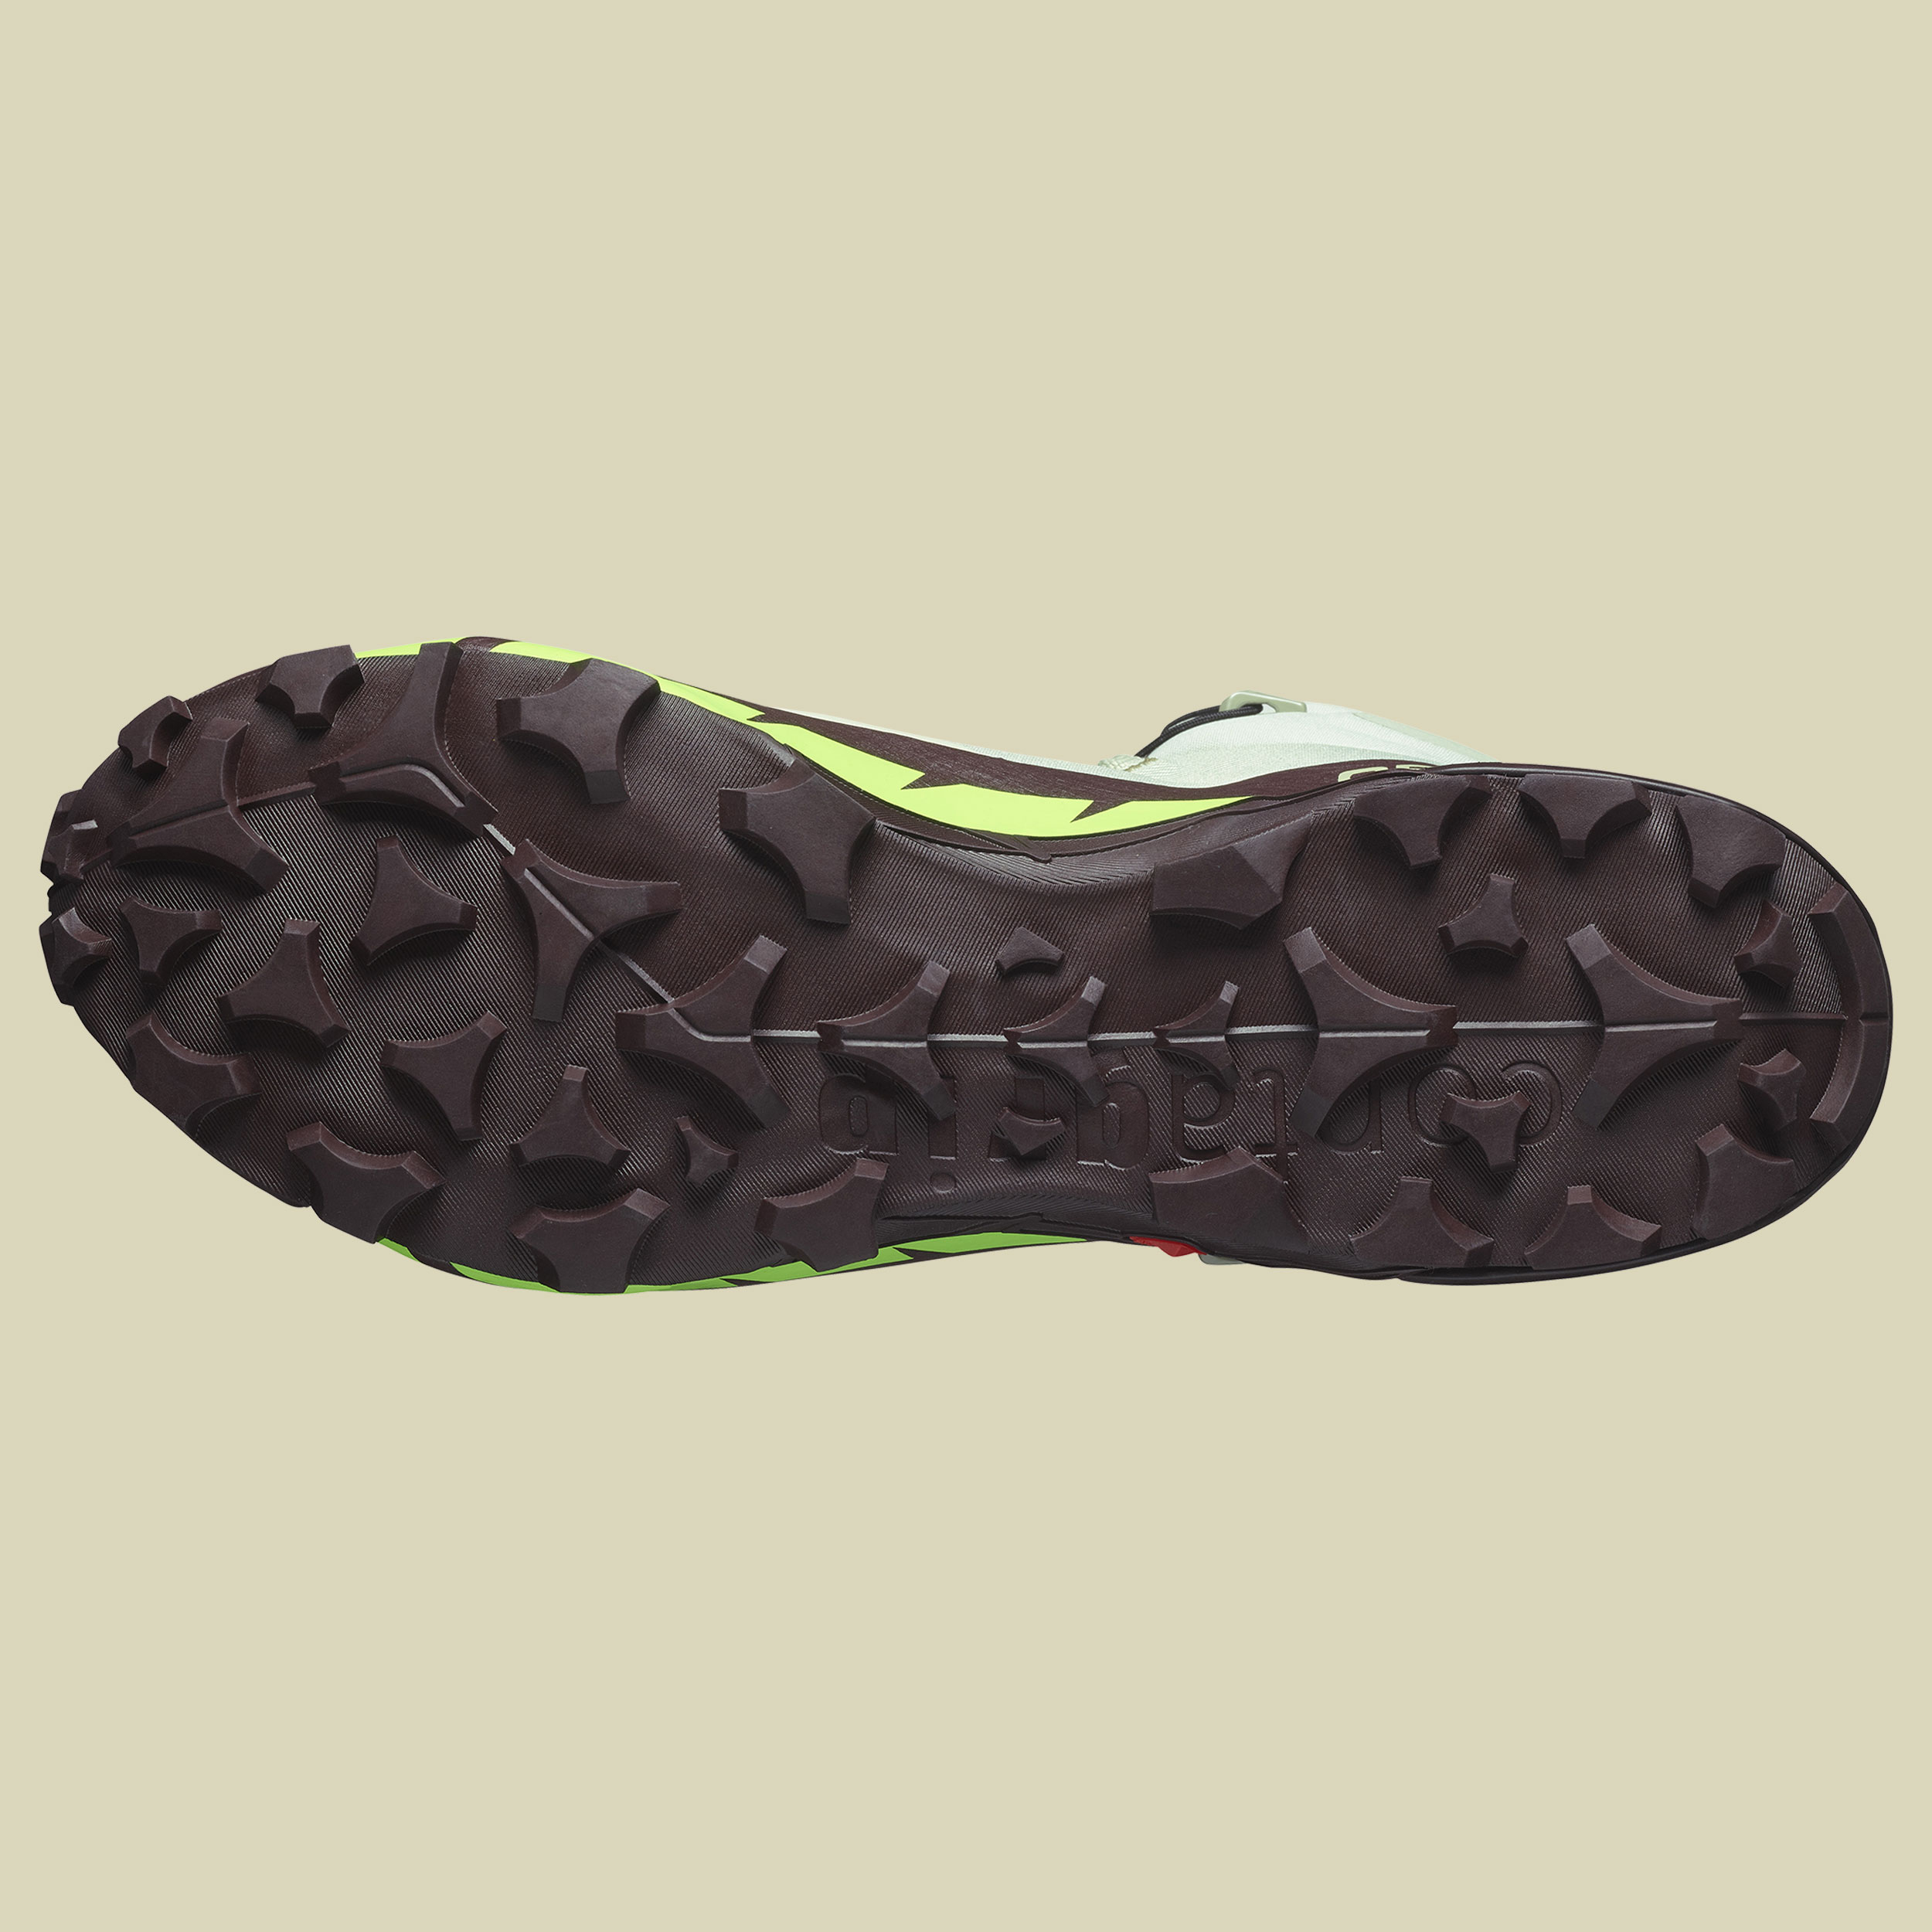 Cross Hike Mid GTX 2 Men Größe UK 9,5 Farbe desert sage/green gecko/chocolate plum